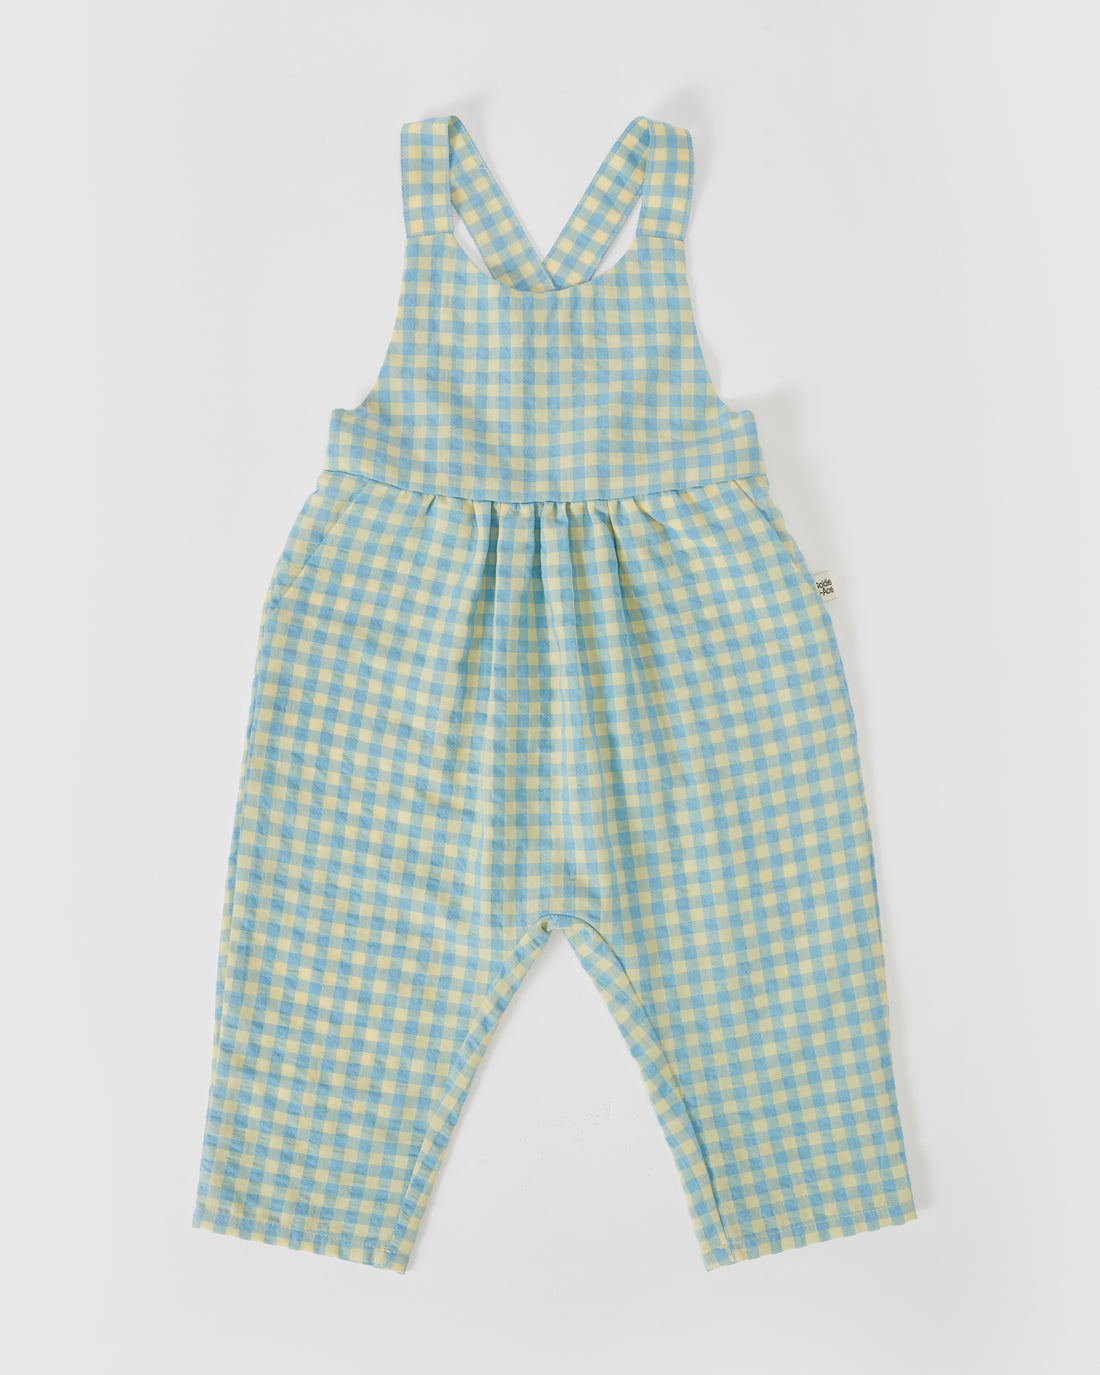 Buy Stylish Unisex Kids, Newborn & Baby Clothing Online - page- Goldie ...